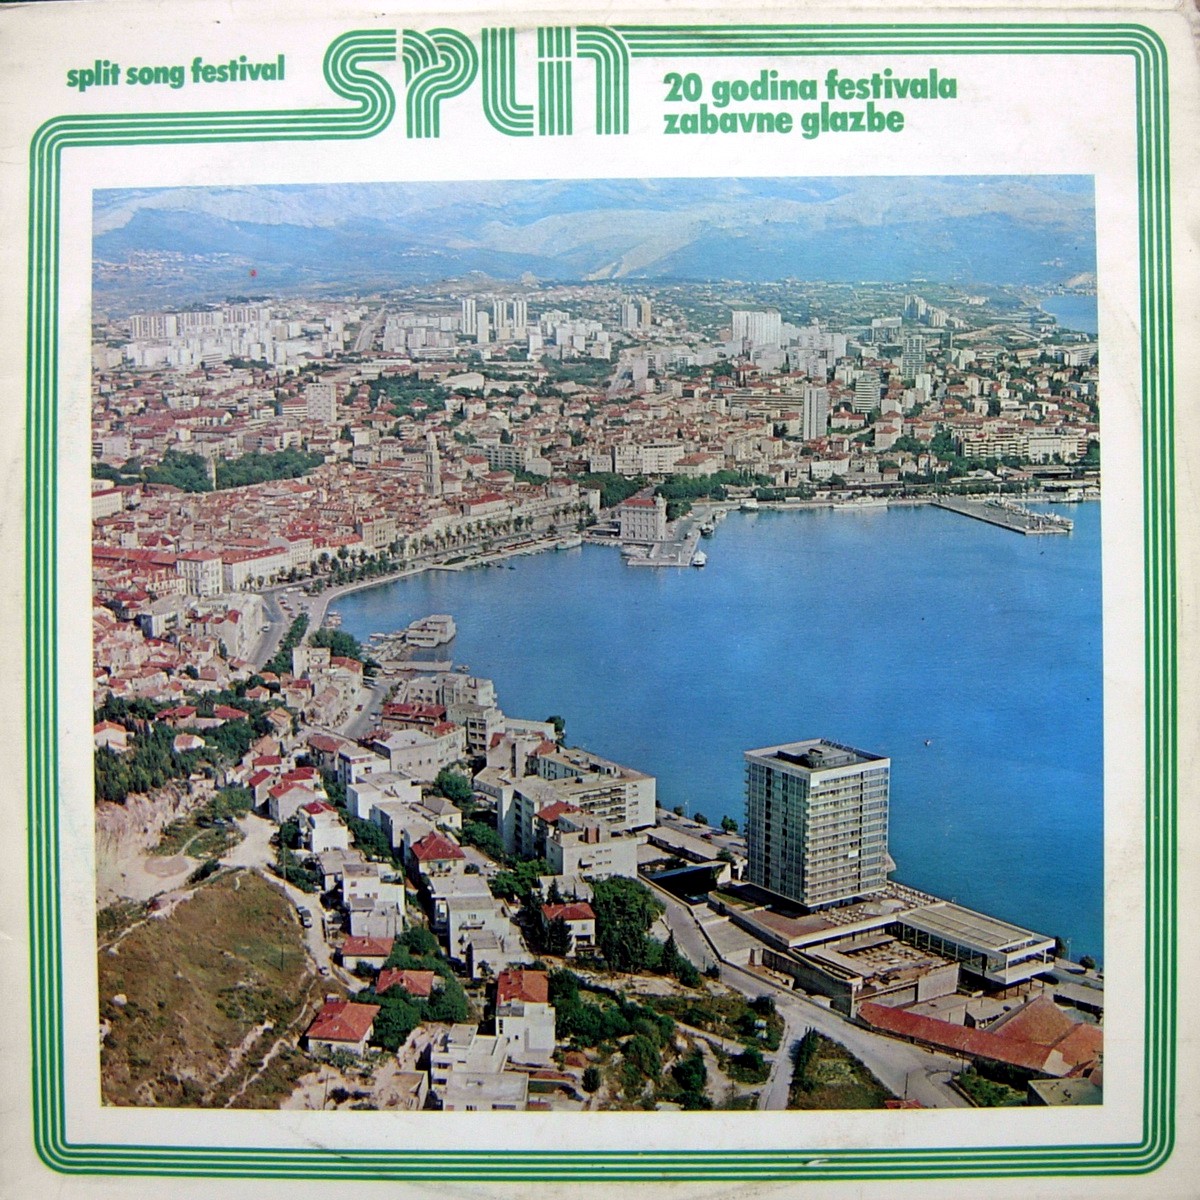 VA 1980 Split 80 20 godina festivala a